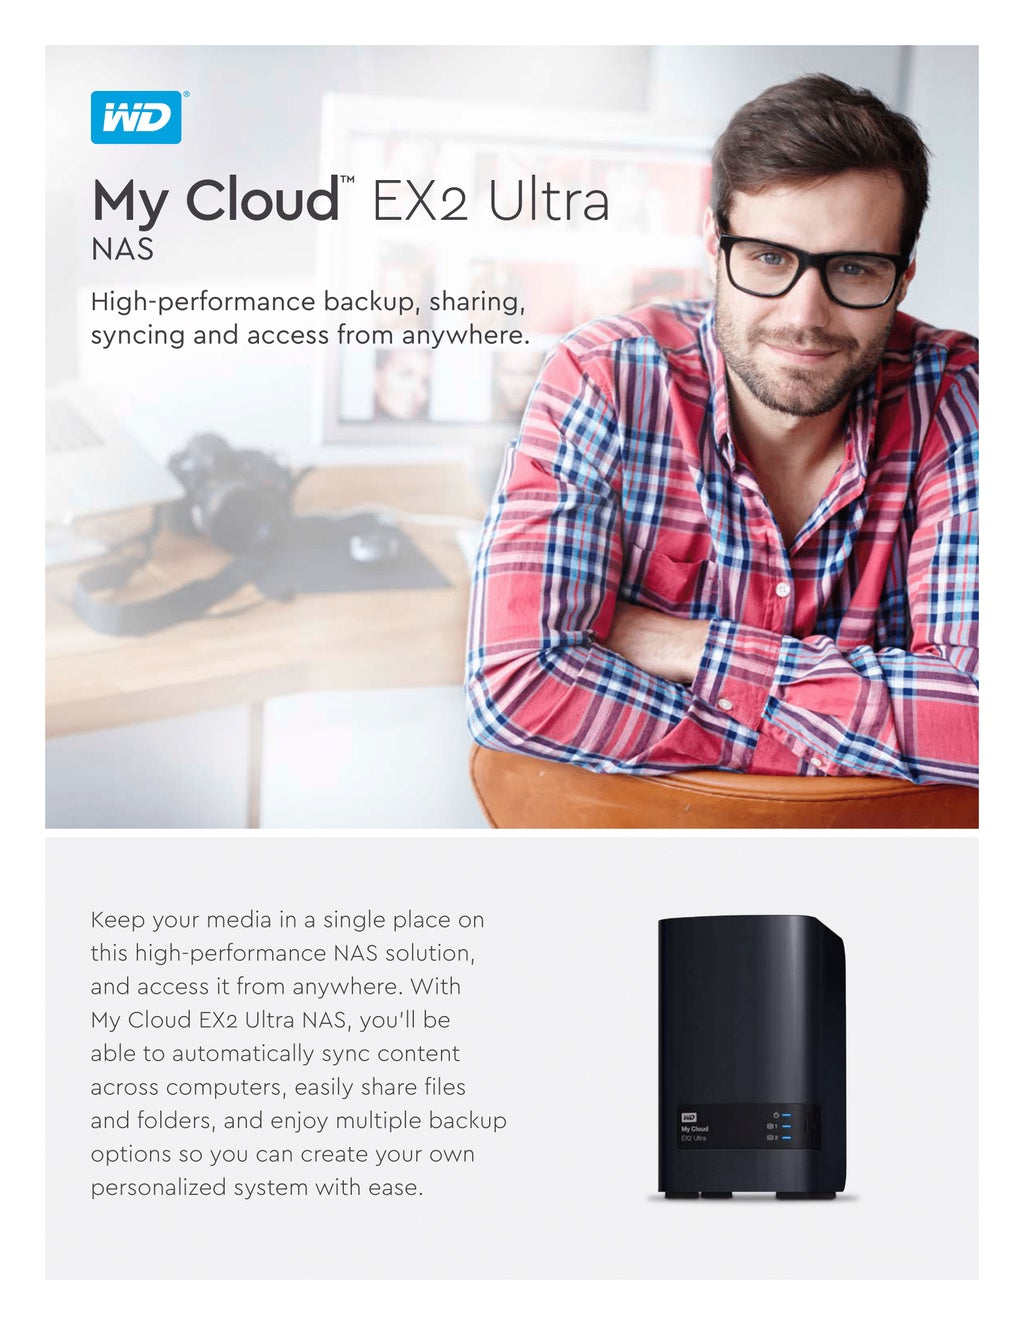 Western Digital WD My Cloud EX2 Ultra 2-Bay NAS Personal Cloud Storage